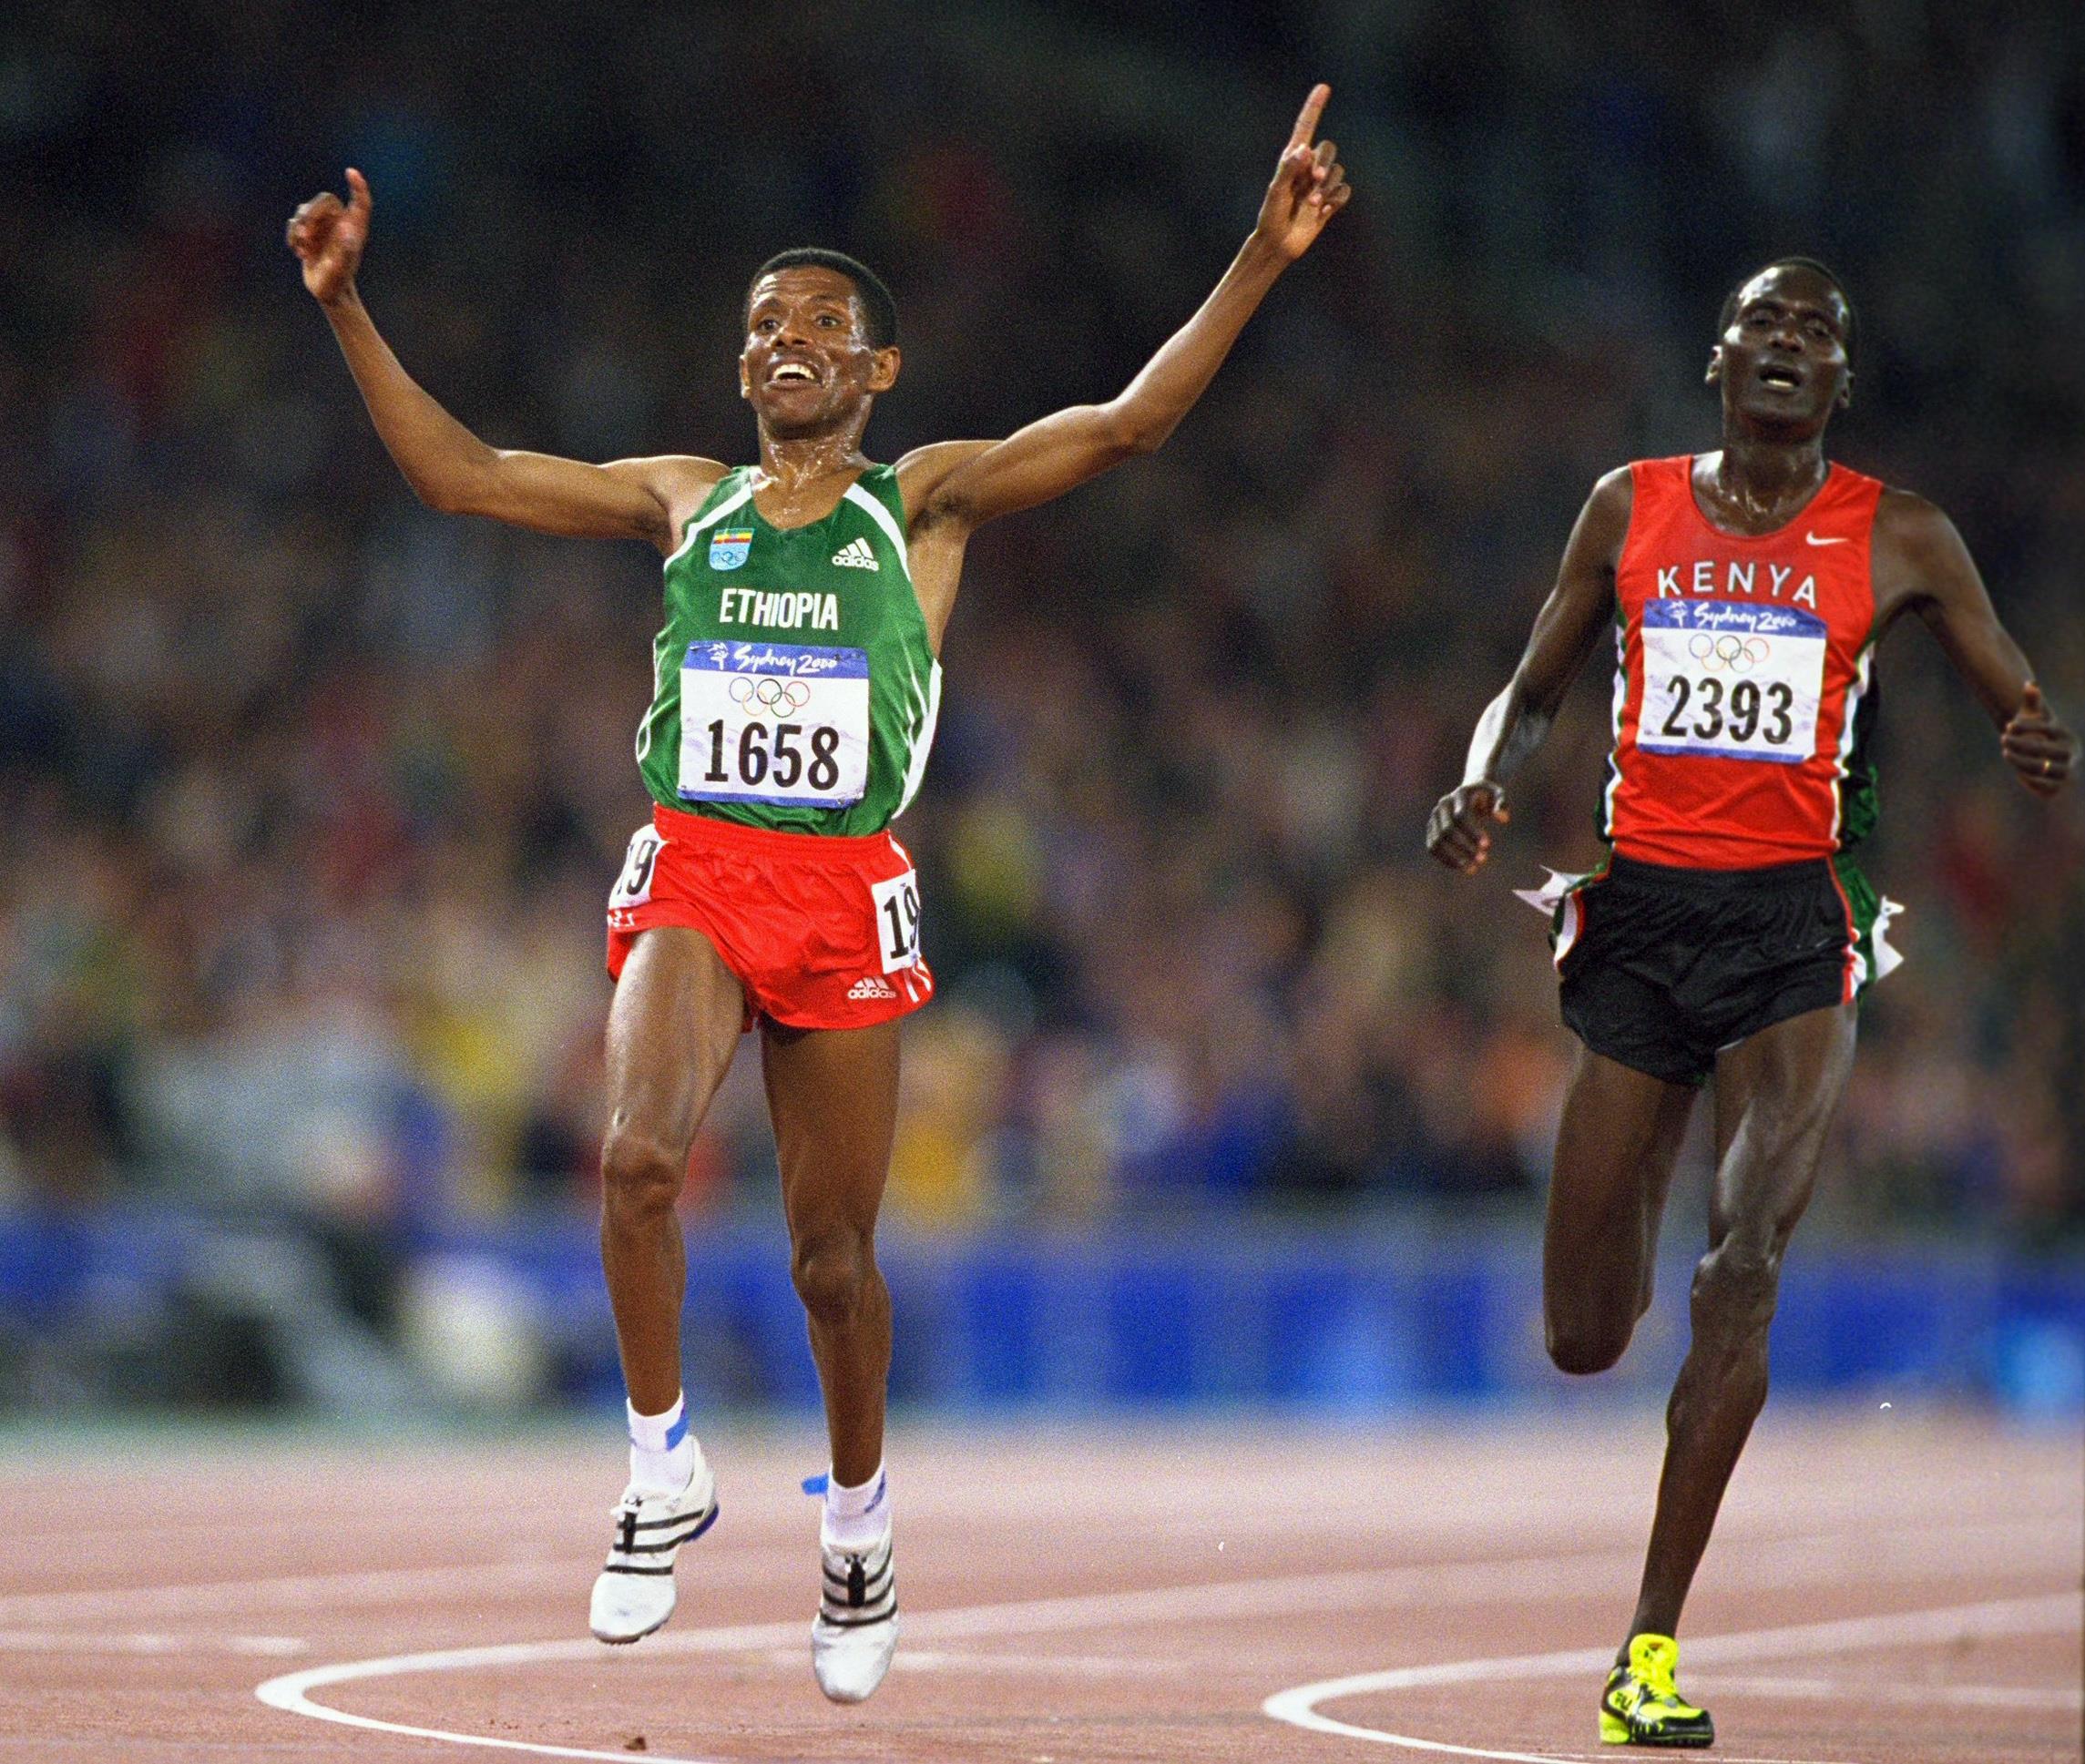 Haile Gebrselassie defeats Paul Tergat at the 2000 Olympics